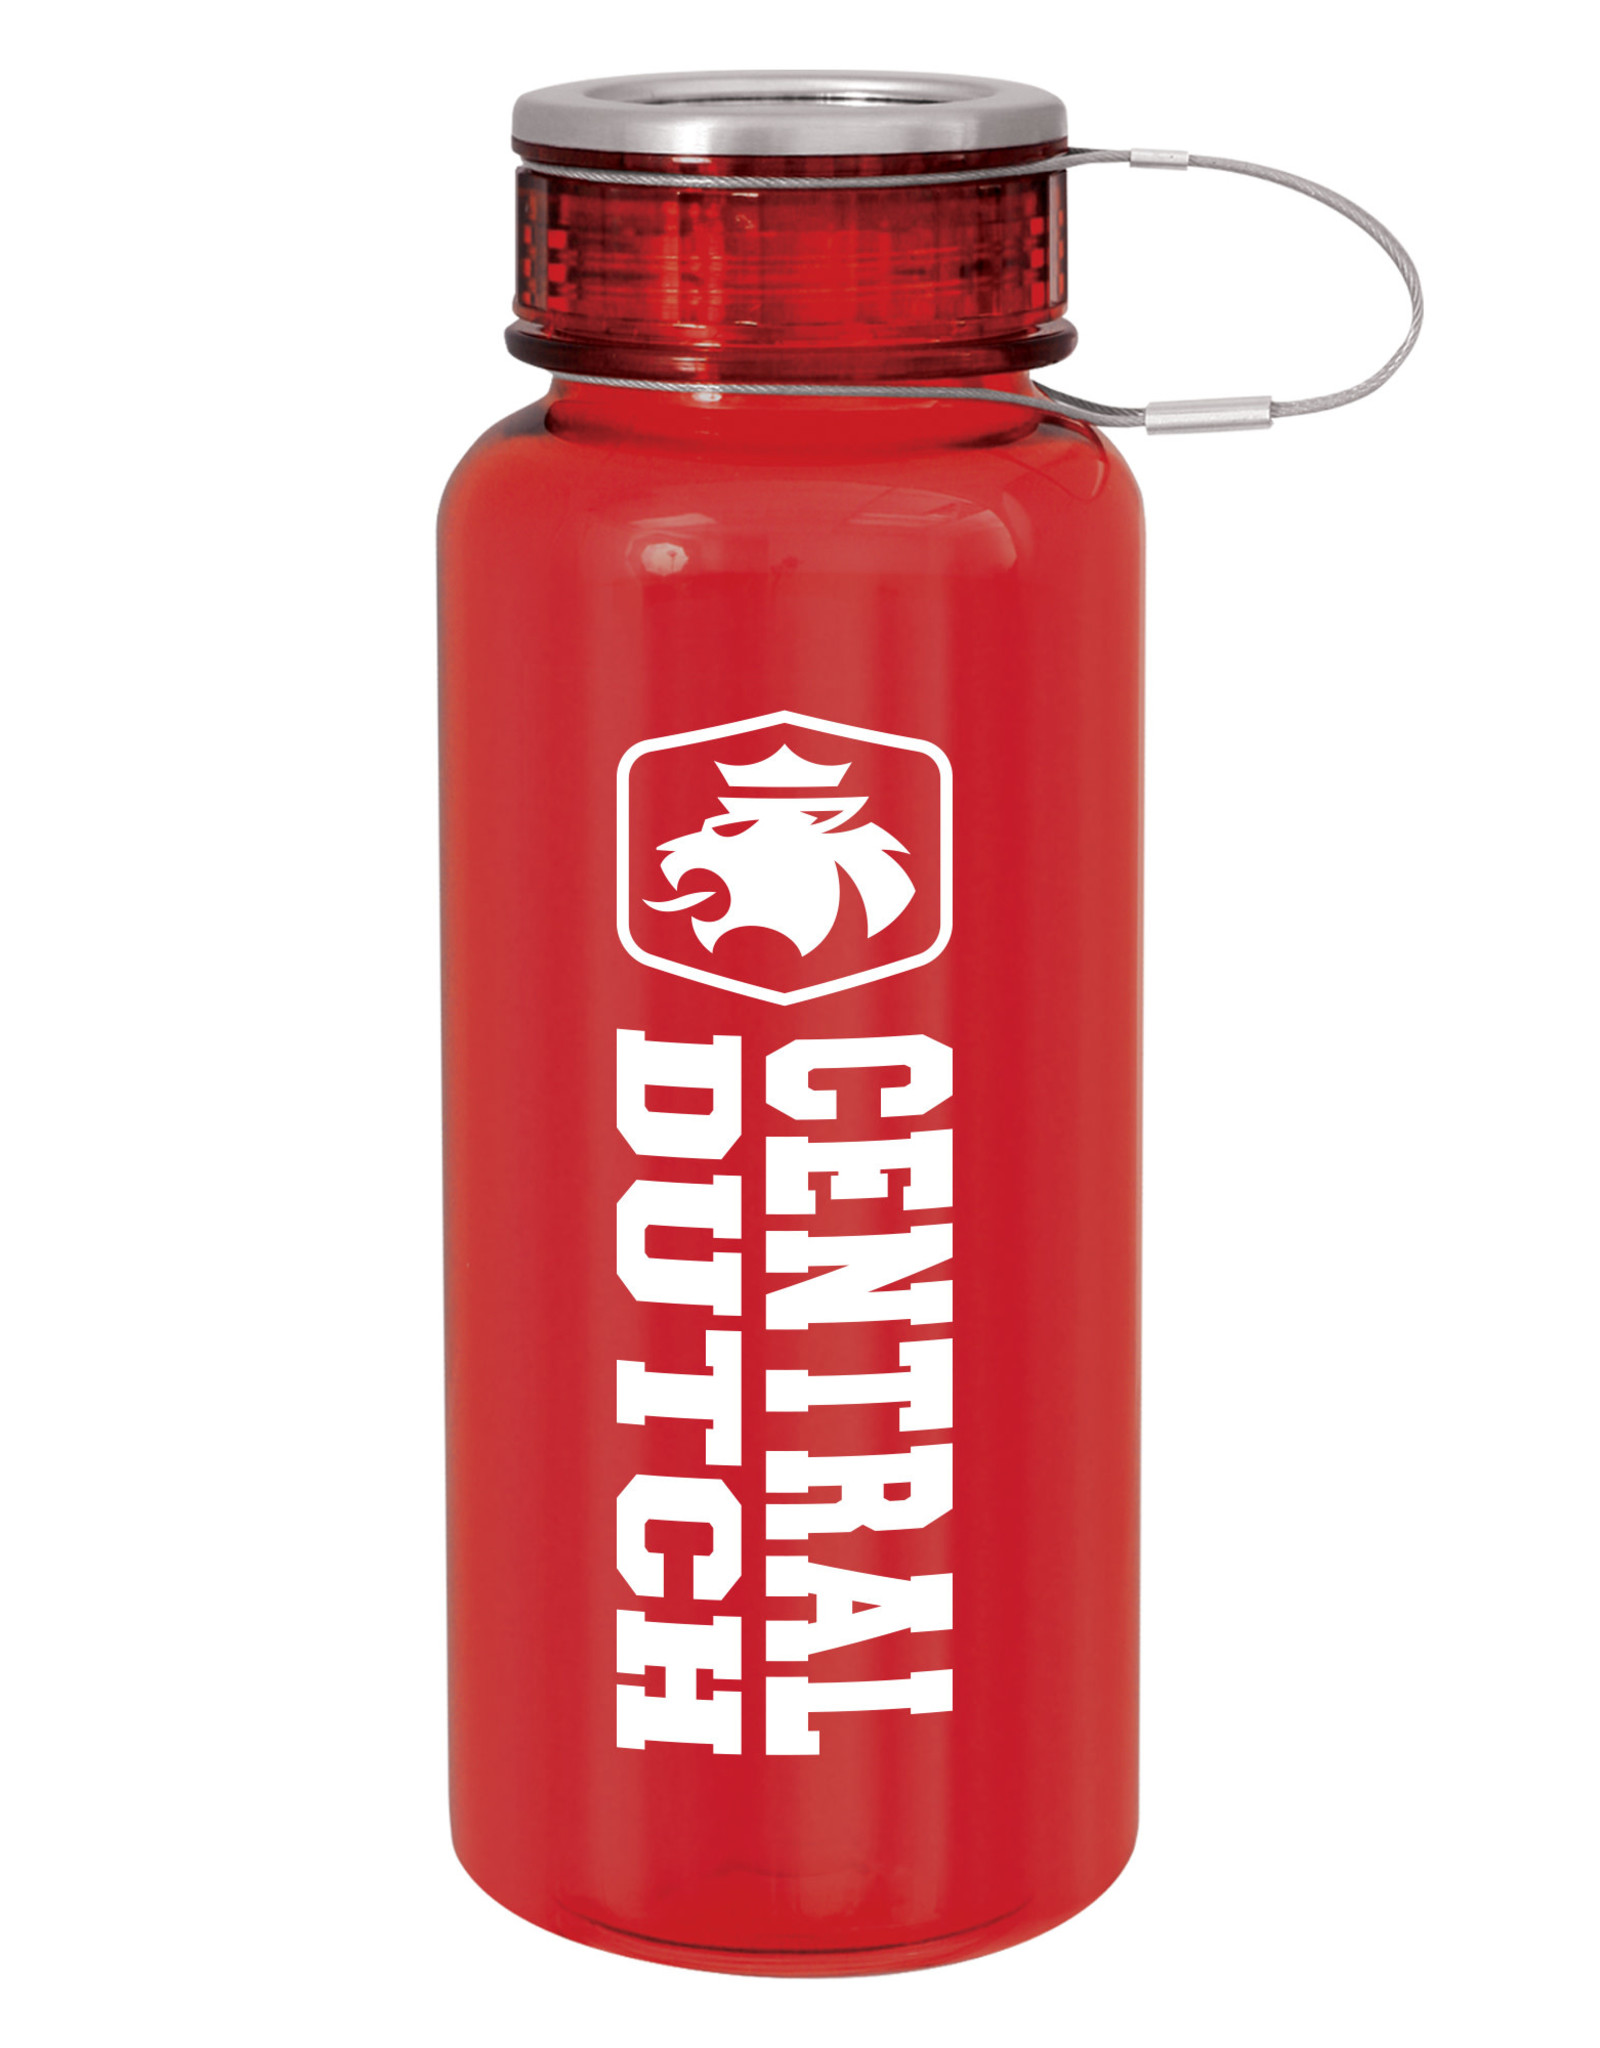 SPIRIT PRODUCTS Spirit Canter Sport Water Bottle